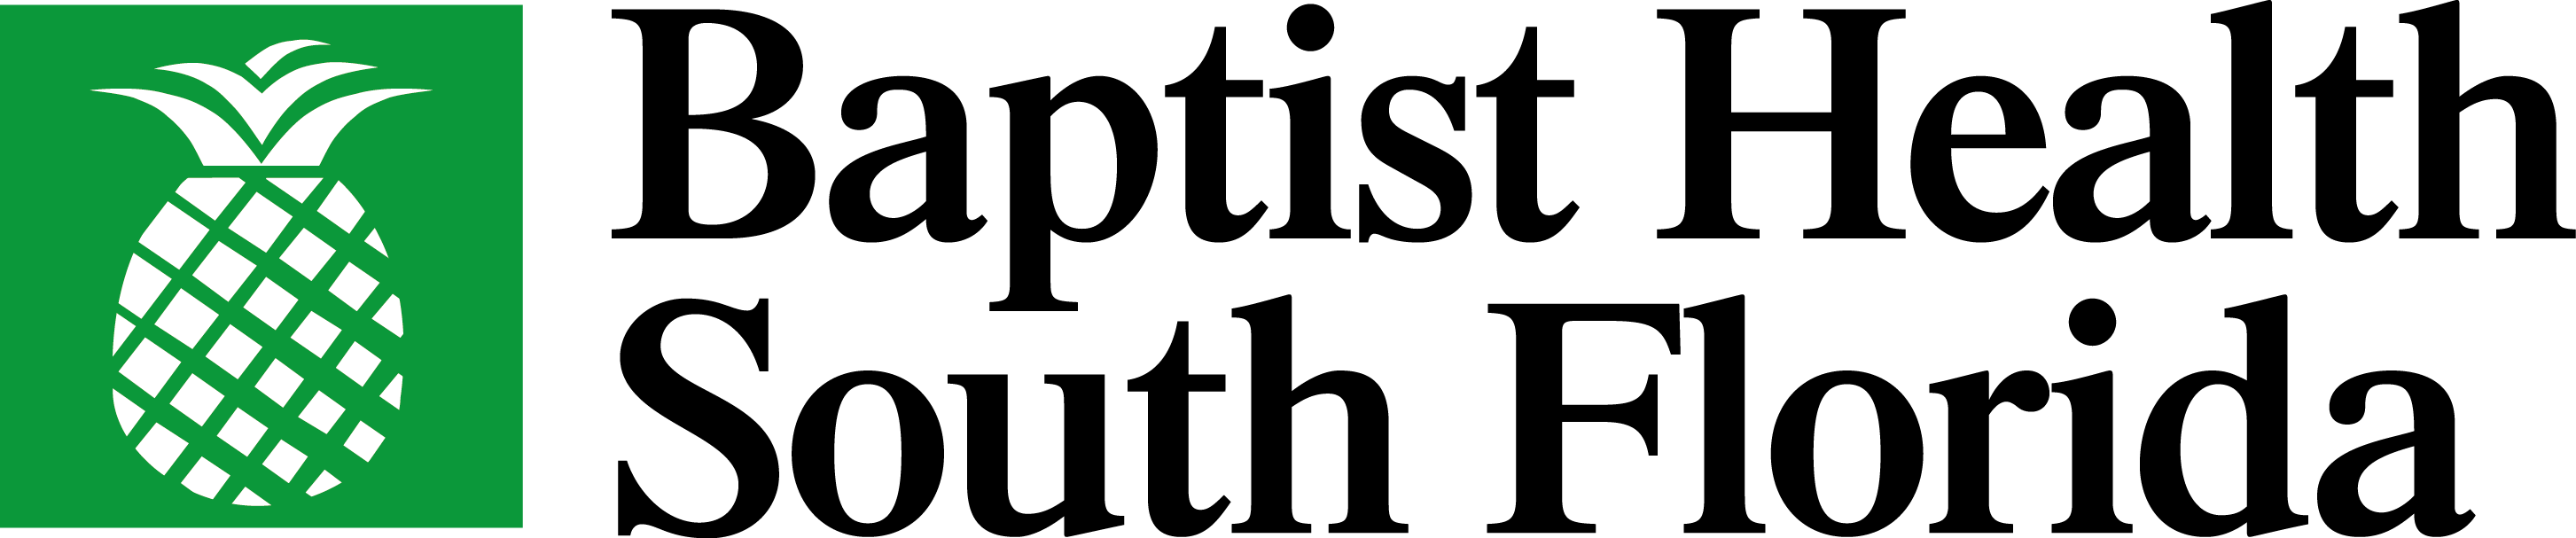 Baptist Health South Florida Logo png